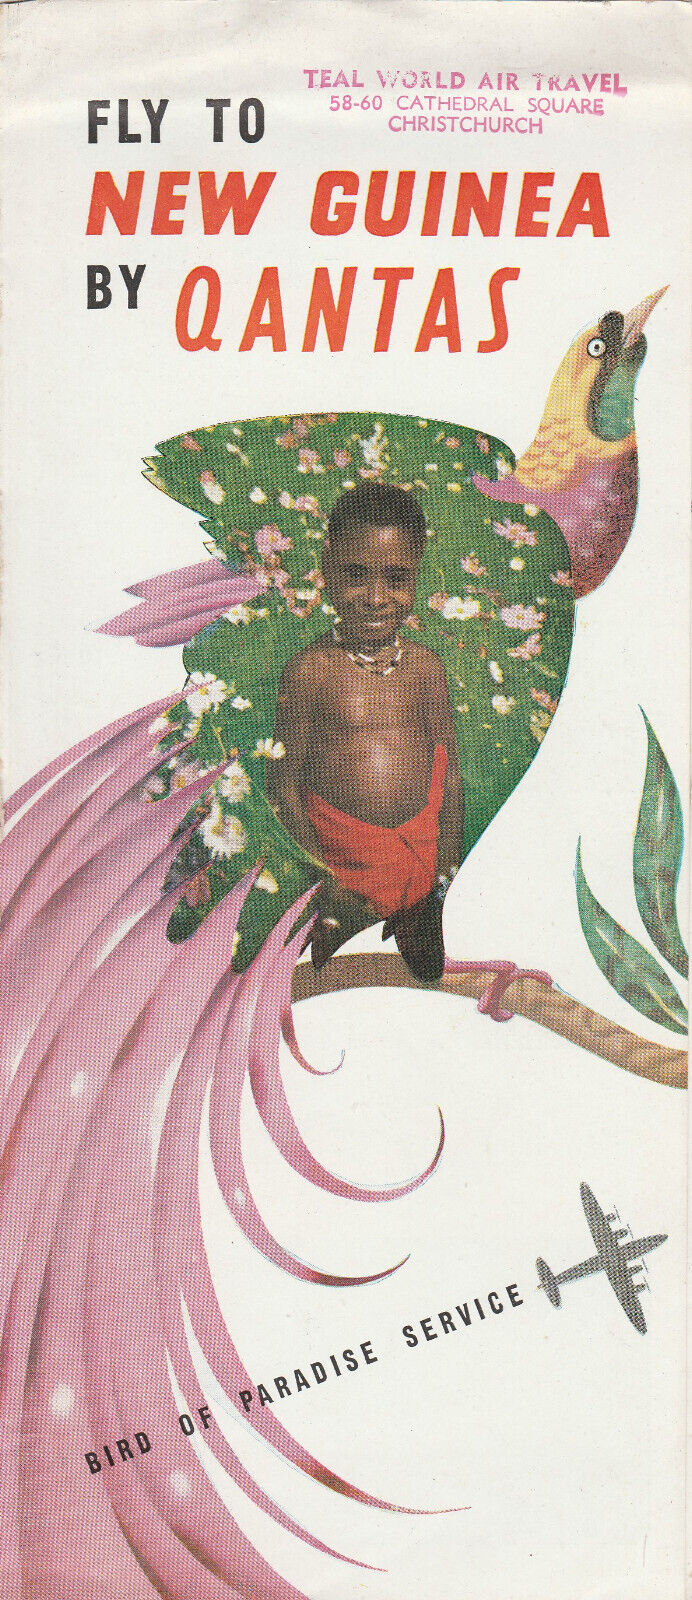 QANTAS 1951 New Guinea promotion brochure